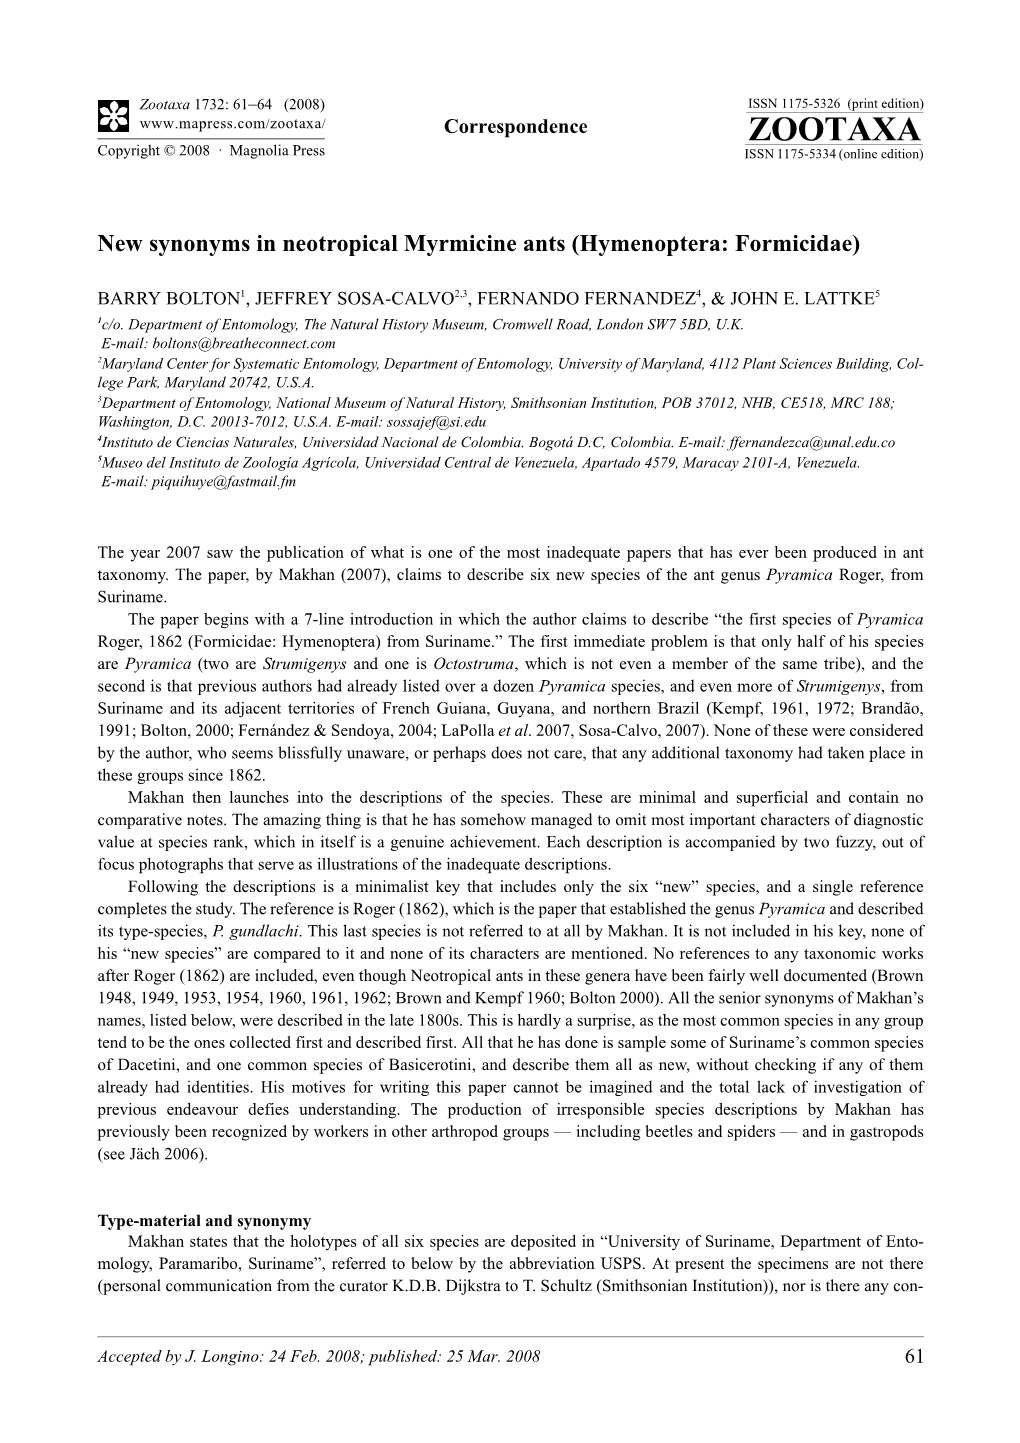 Zootaxa, New Synonyms in Neotropical Myrmicine Ants